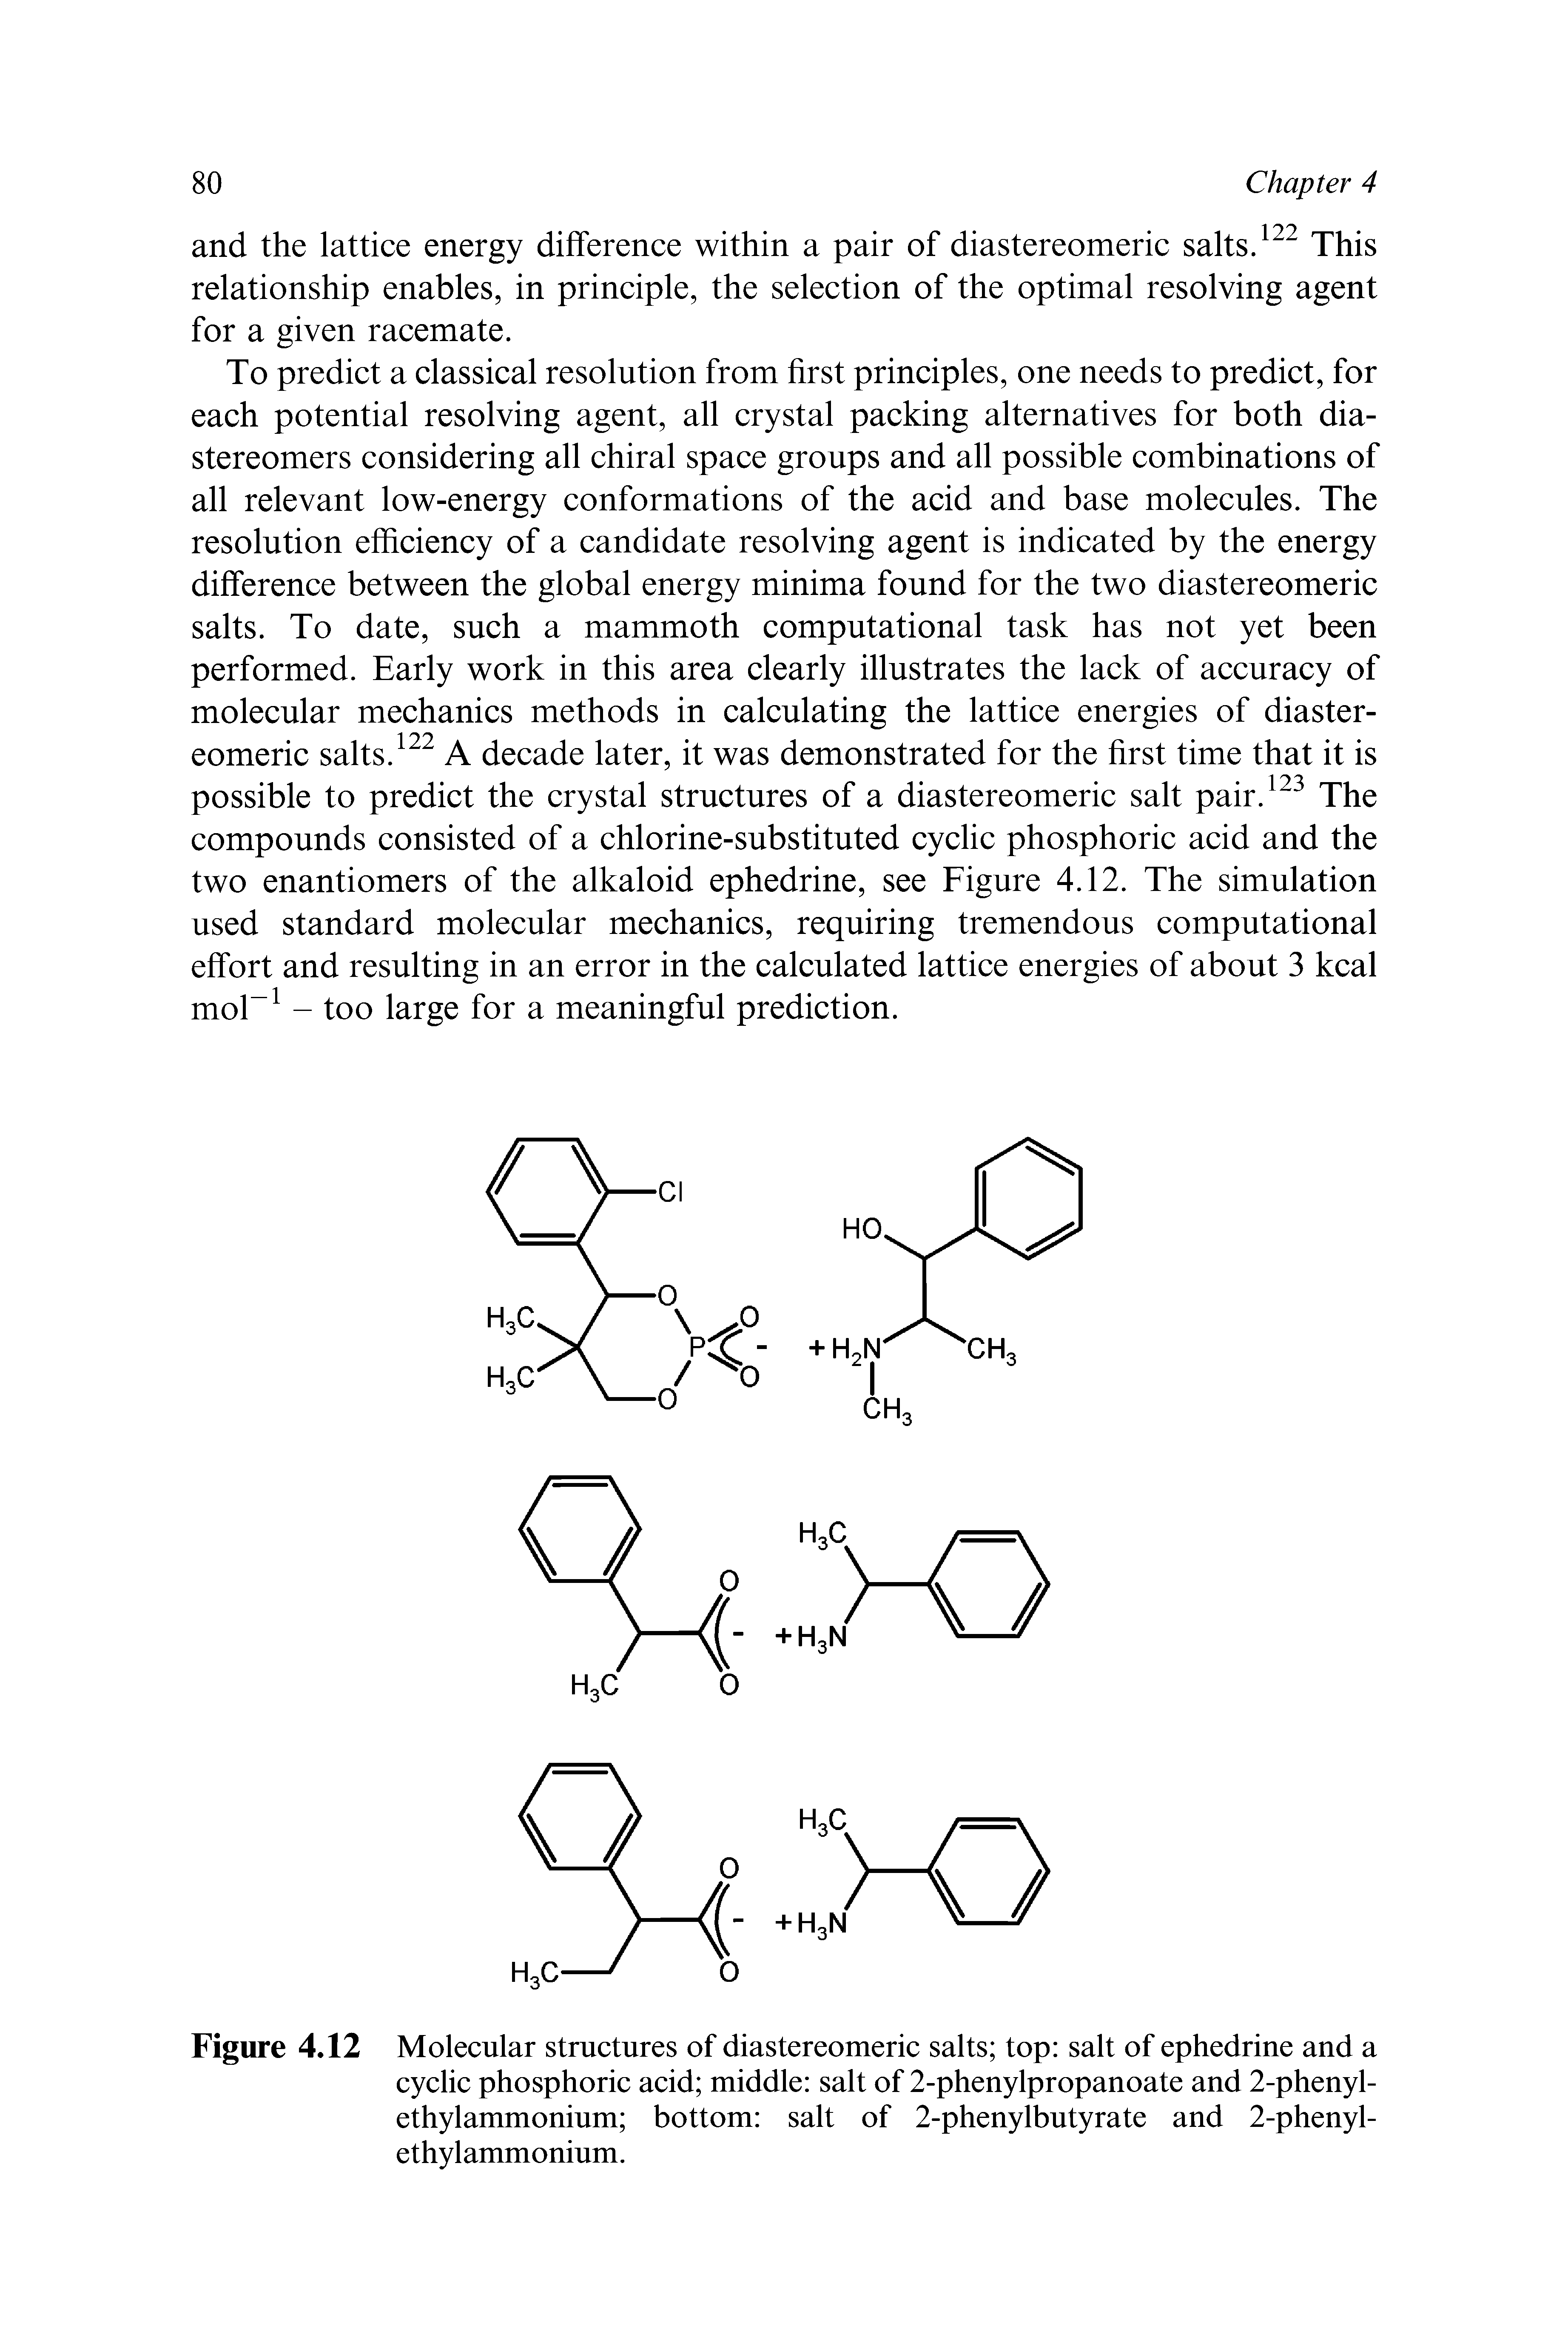 Figure 4.12 Molecular structures of diastereomeric salts top salt of ephedrine and a cyclic phosphoric acid middle salt of 2-phenylpropanoate and 2-phenyl-ethylammonium bottom salt of 2-phenylbutyrate and 2-phenyl-ethylammonium.